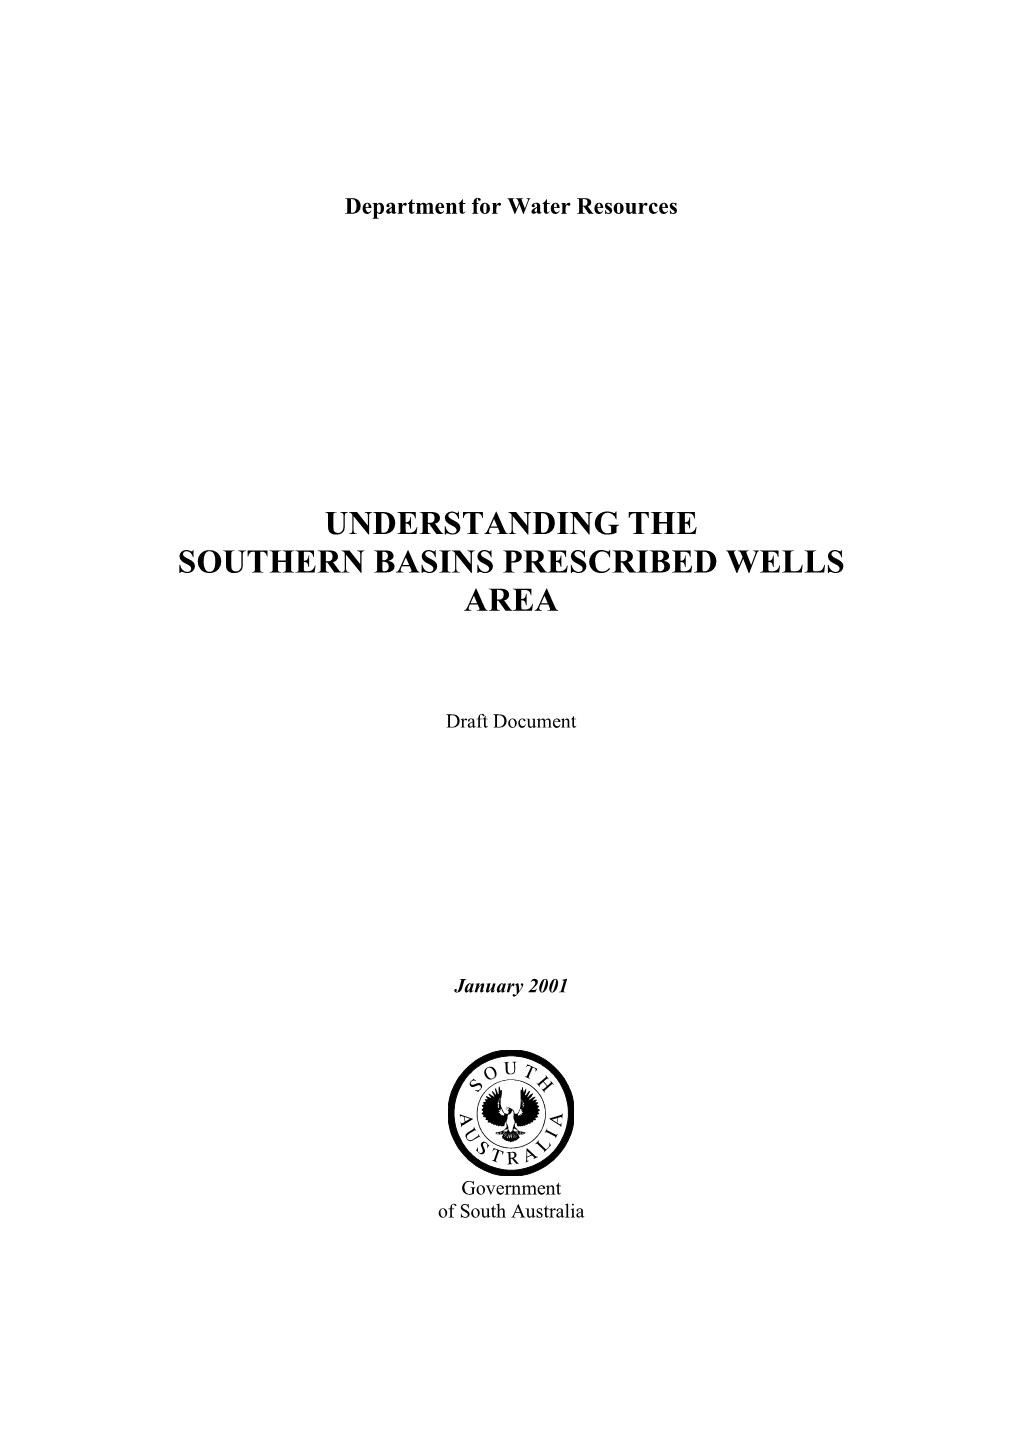 Understanding the Southern Basins Prescribed Wells Area